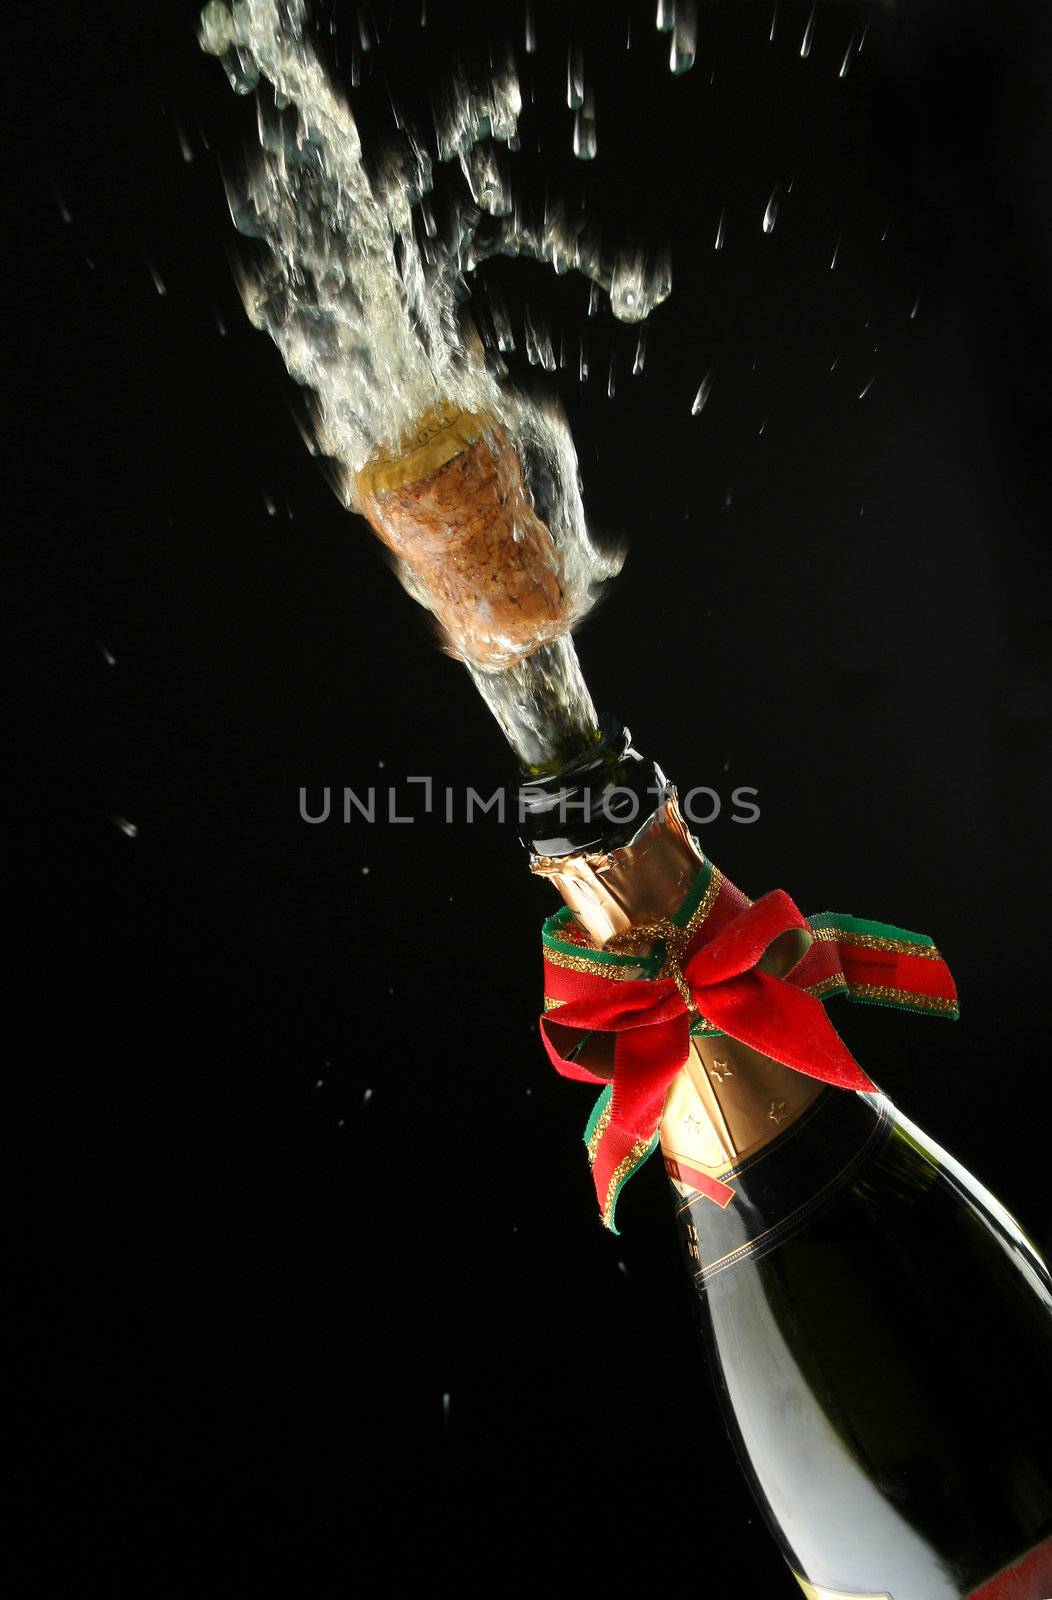 Champagne bottle ready for celebration by Erdosain